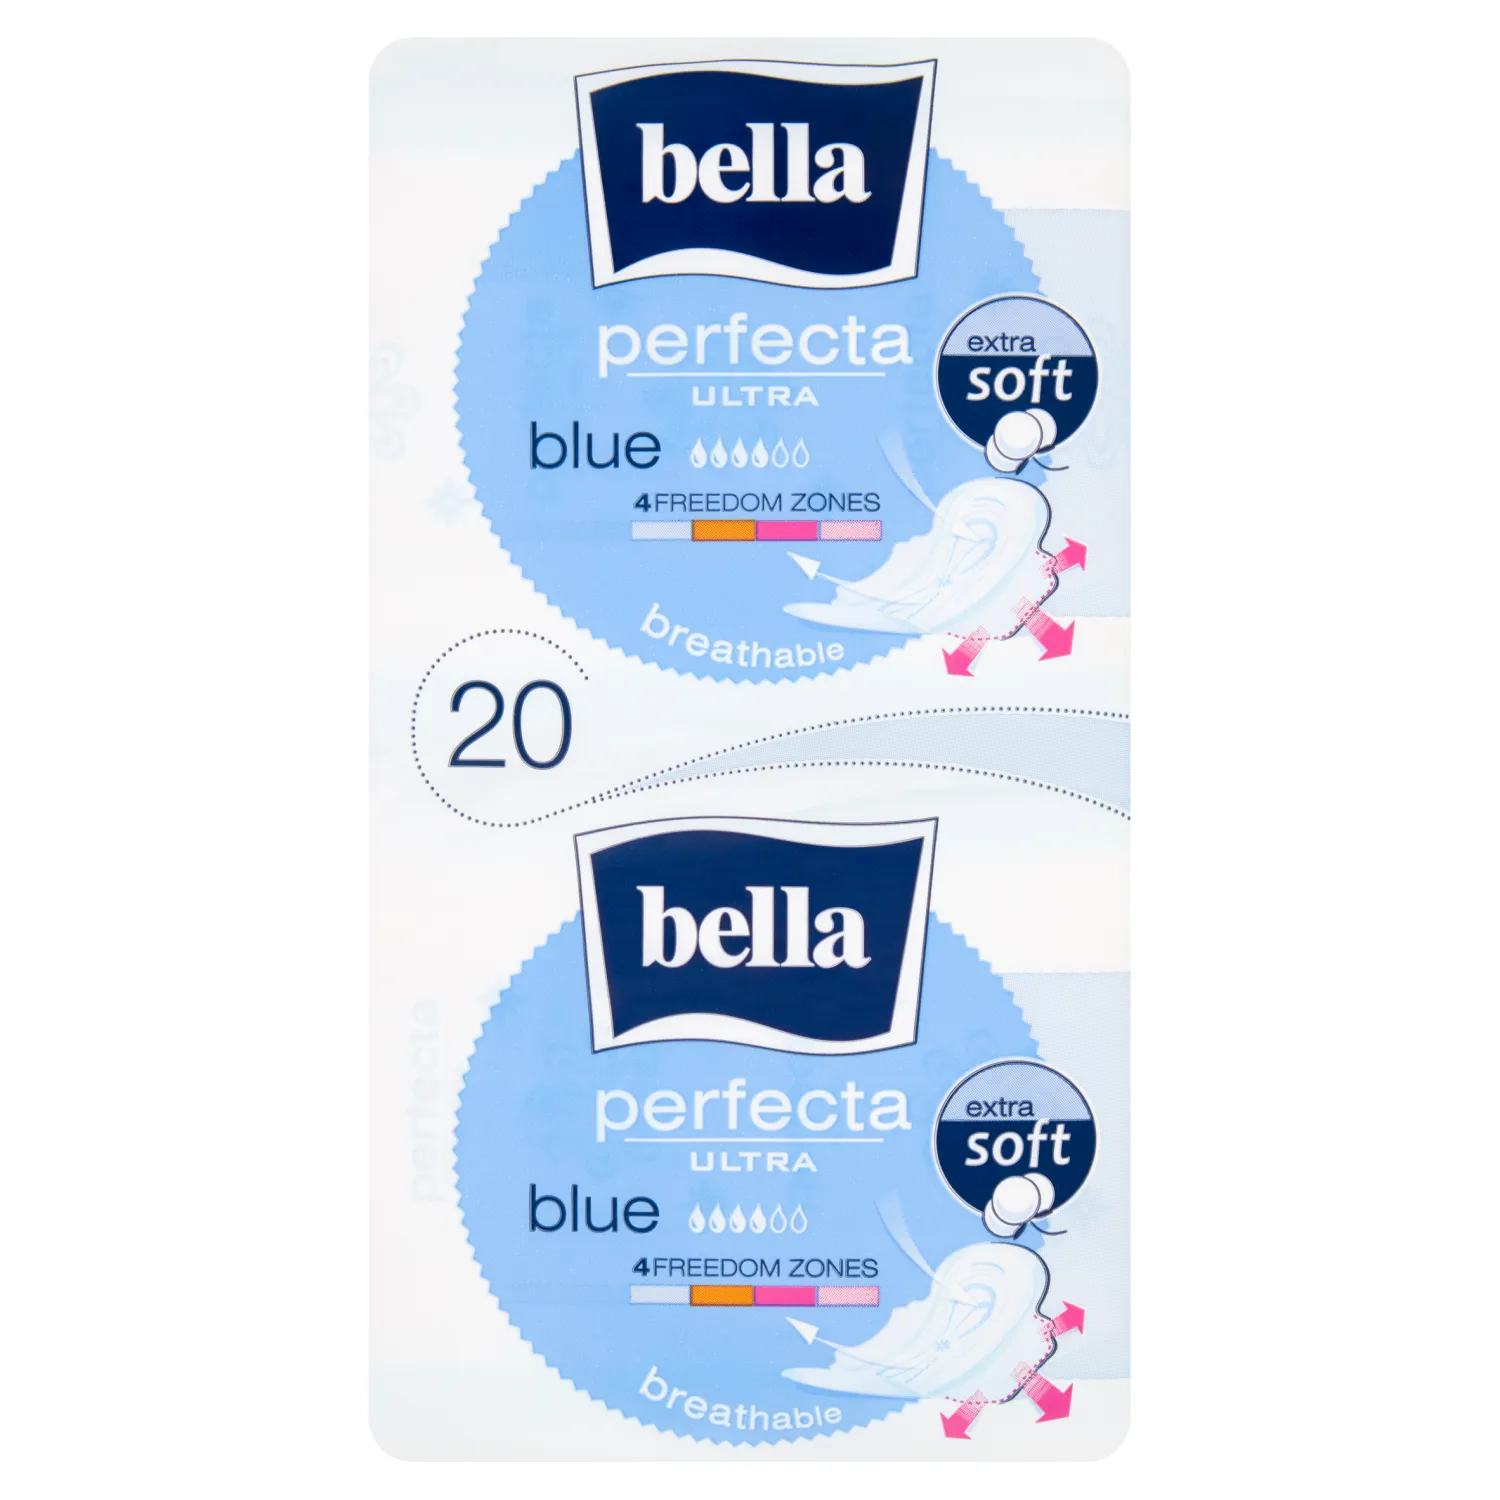 Bella Perfecta Ultra Blue, podpaski higieniczne, 20 sztuk